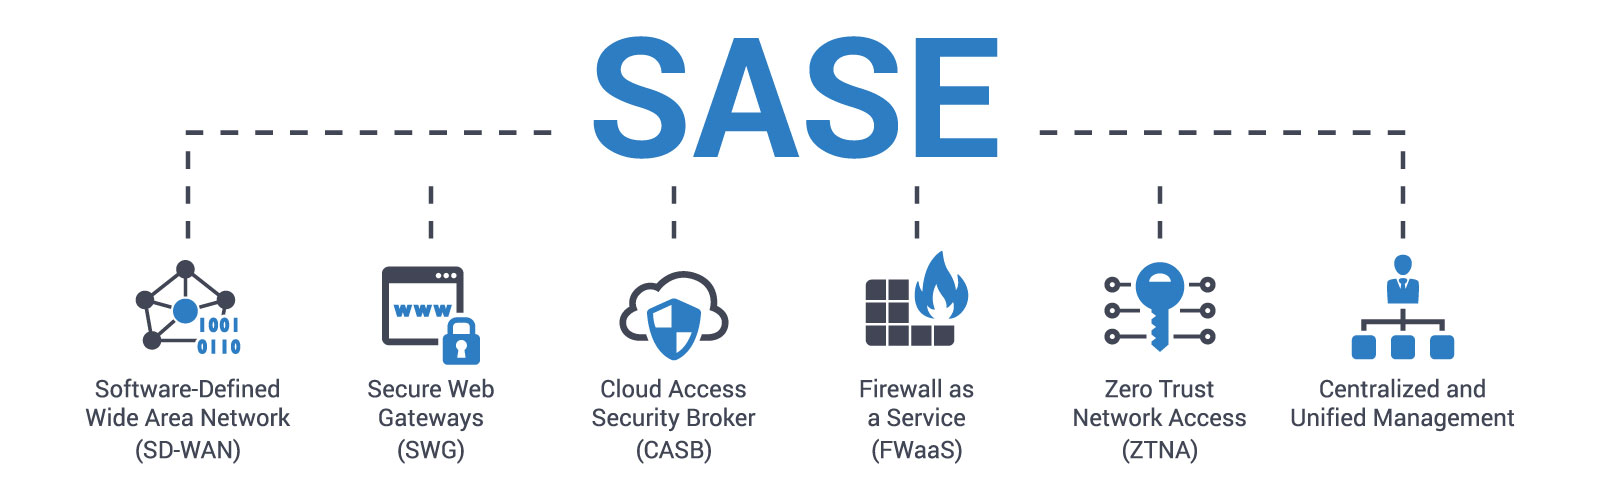 Elements of SASE Architectures